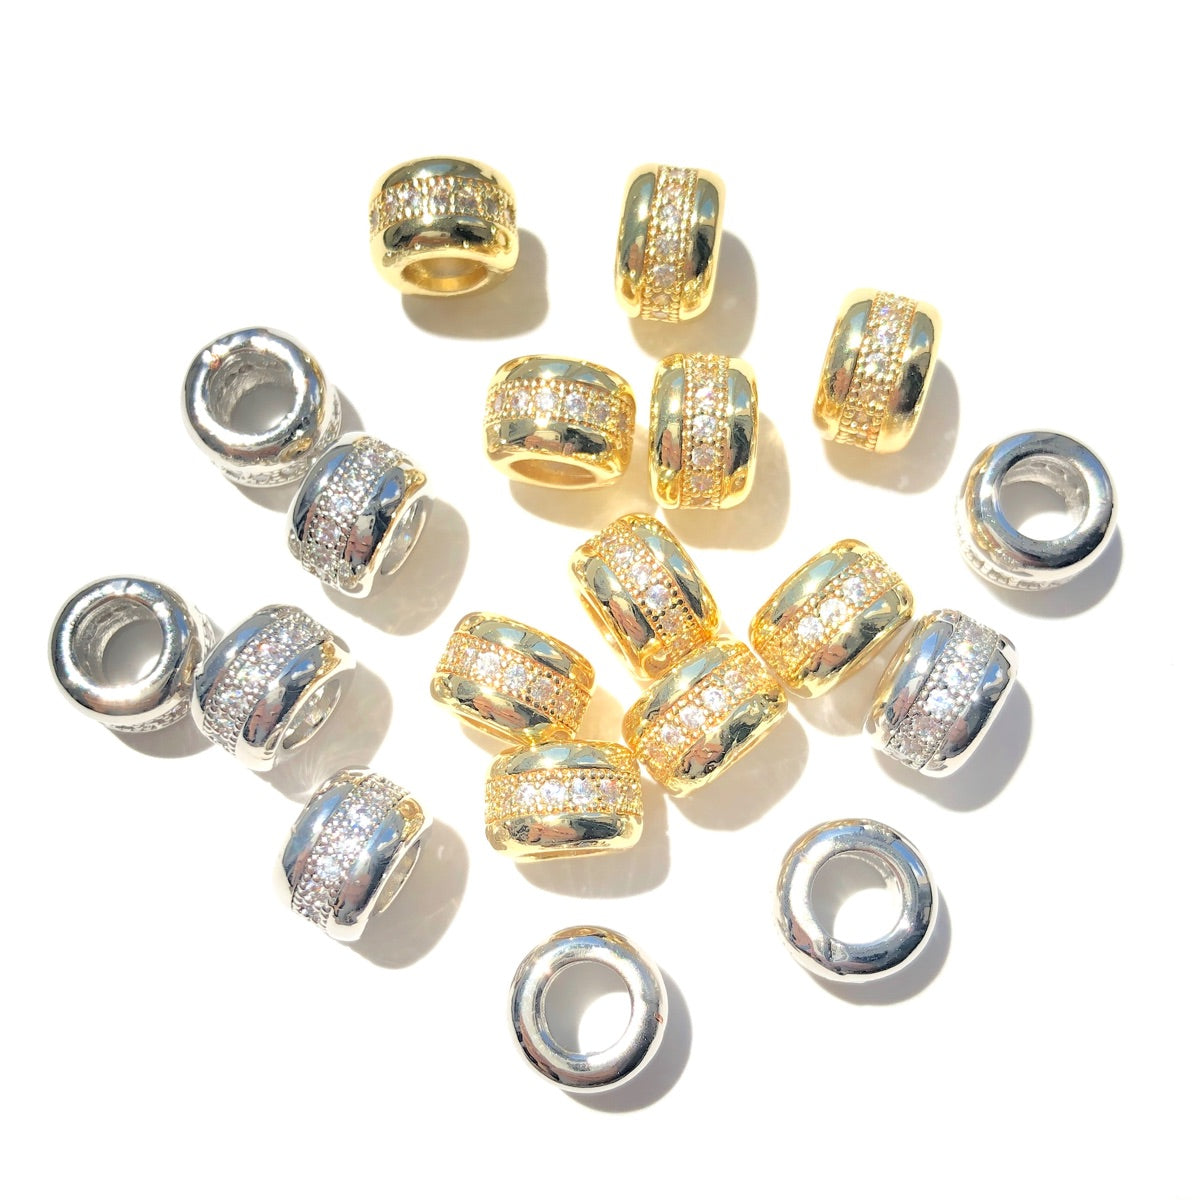 20-50pcs/lot 7.6mm CZ Paved Big Hole Rondelle Wheel Spacers Mix Colors CZ Paved Spacers Big Hole Beads New Spacers Arrivals Rondelle Beads Wholesale Charms Beads Beyond